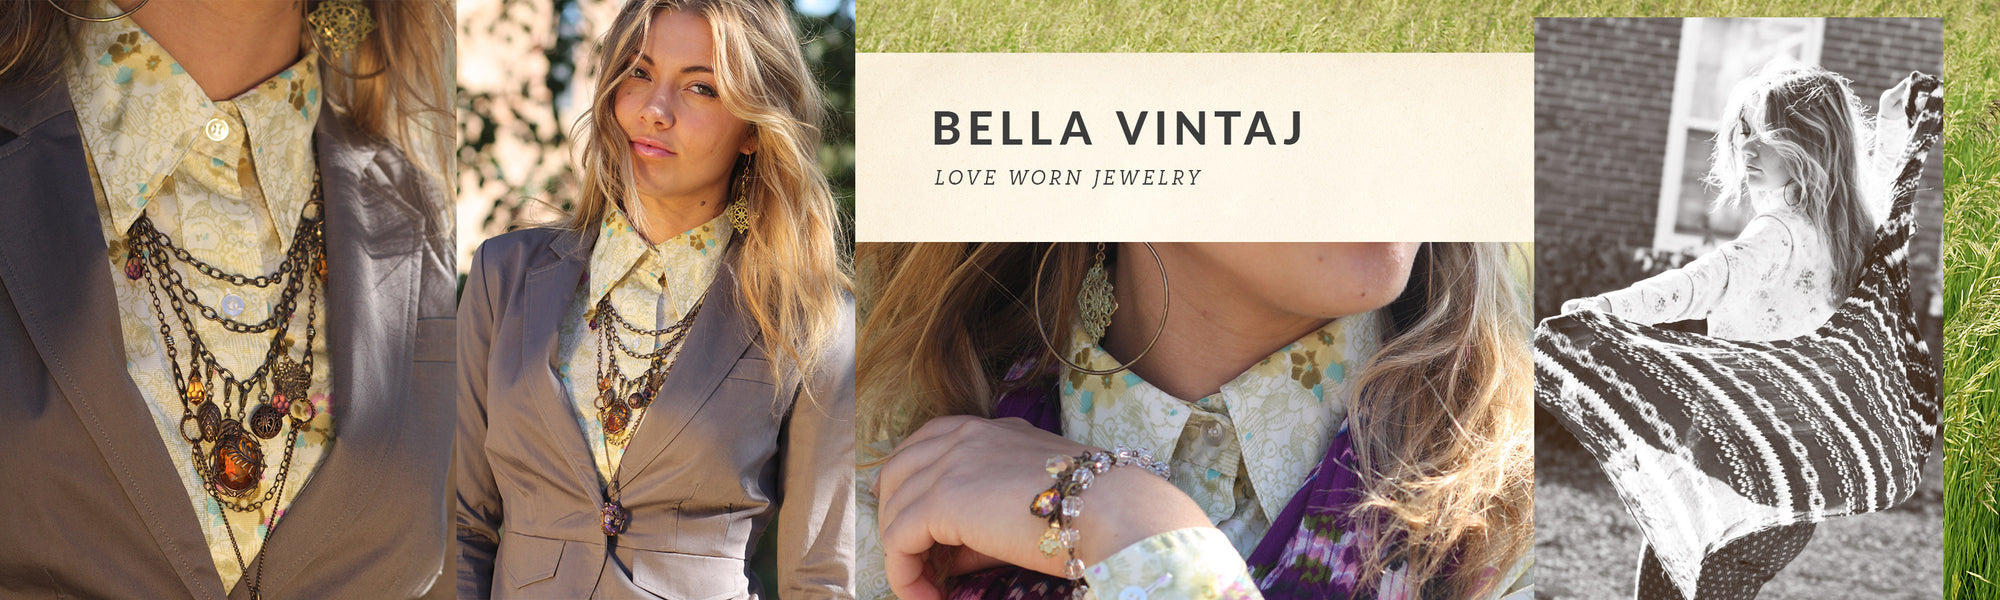 Bella Vintaj Jewelry